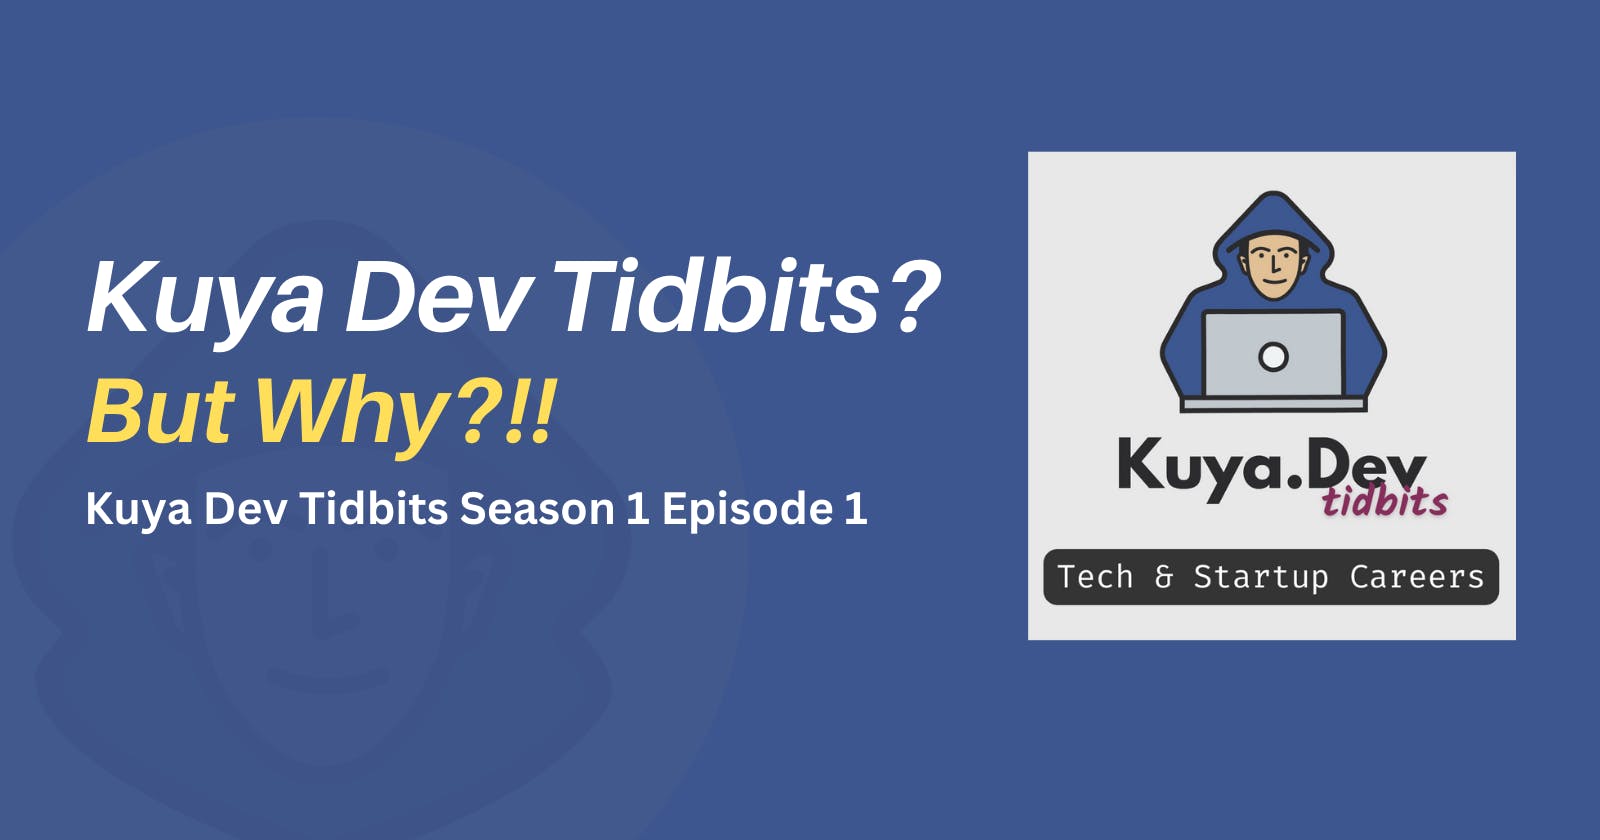 Kuya Dev Tidbits Podcast? But Why?!!